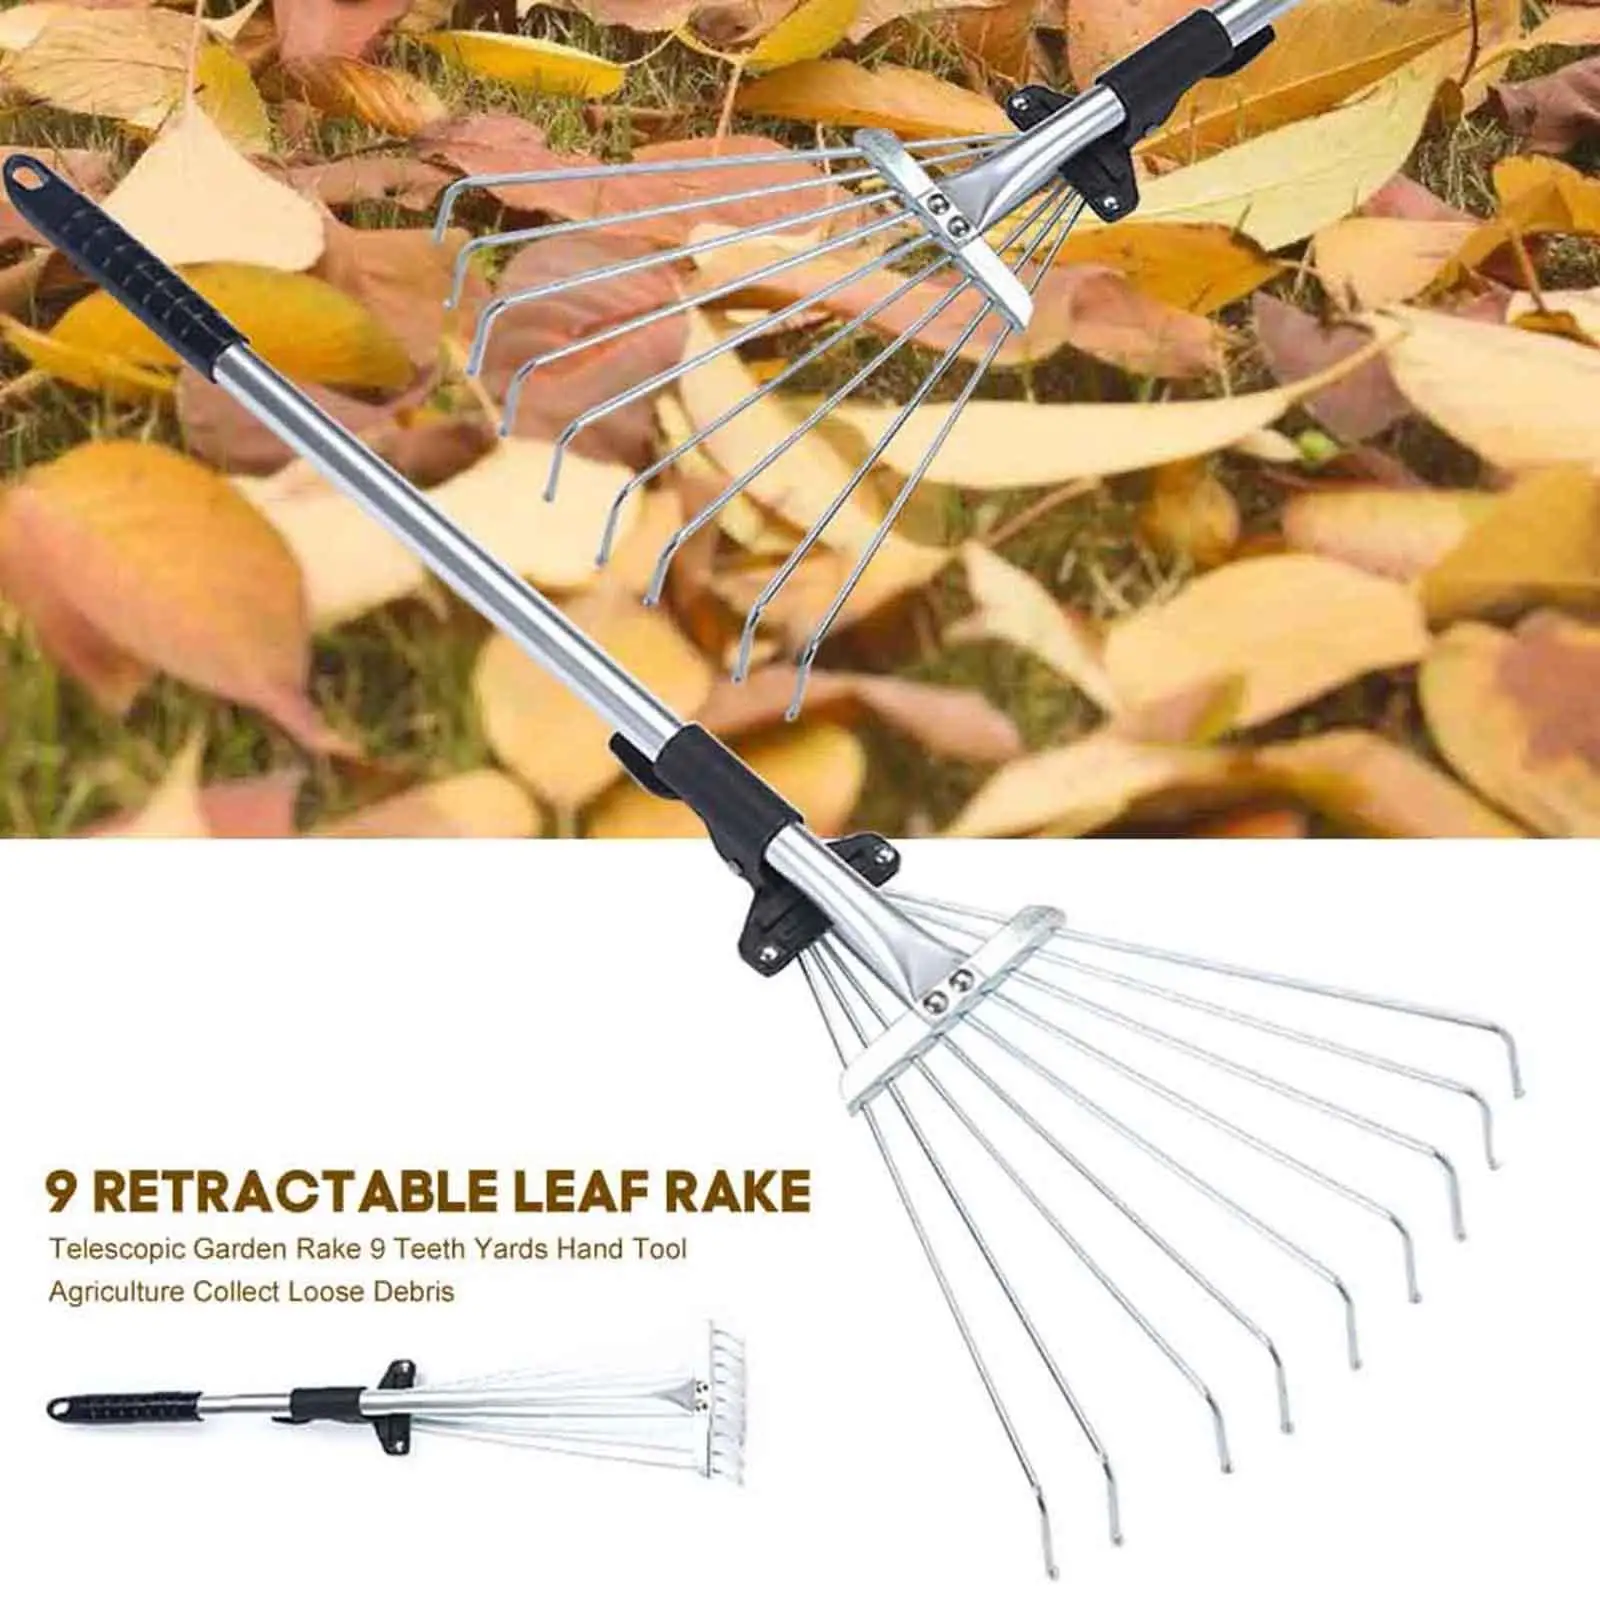 Telescopic Garden Leaf Rake Lightweight Adjustable for Plants Lawns Camping